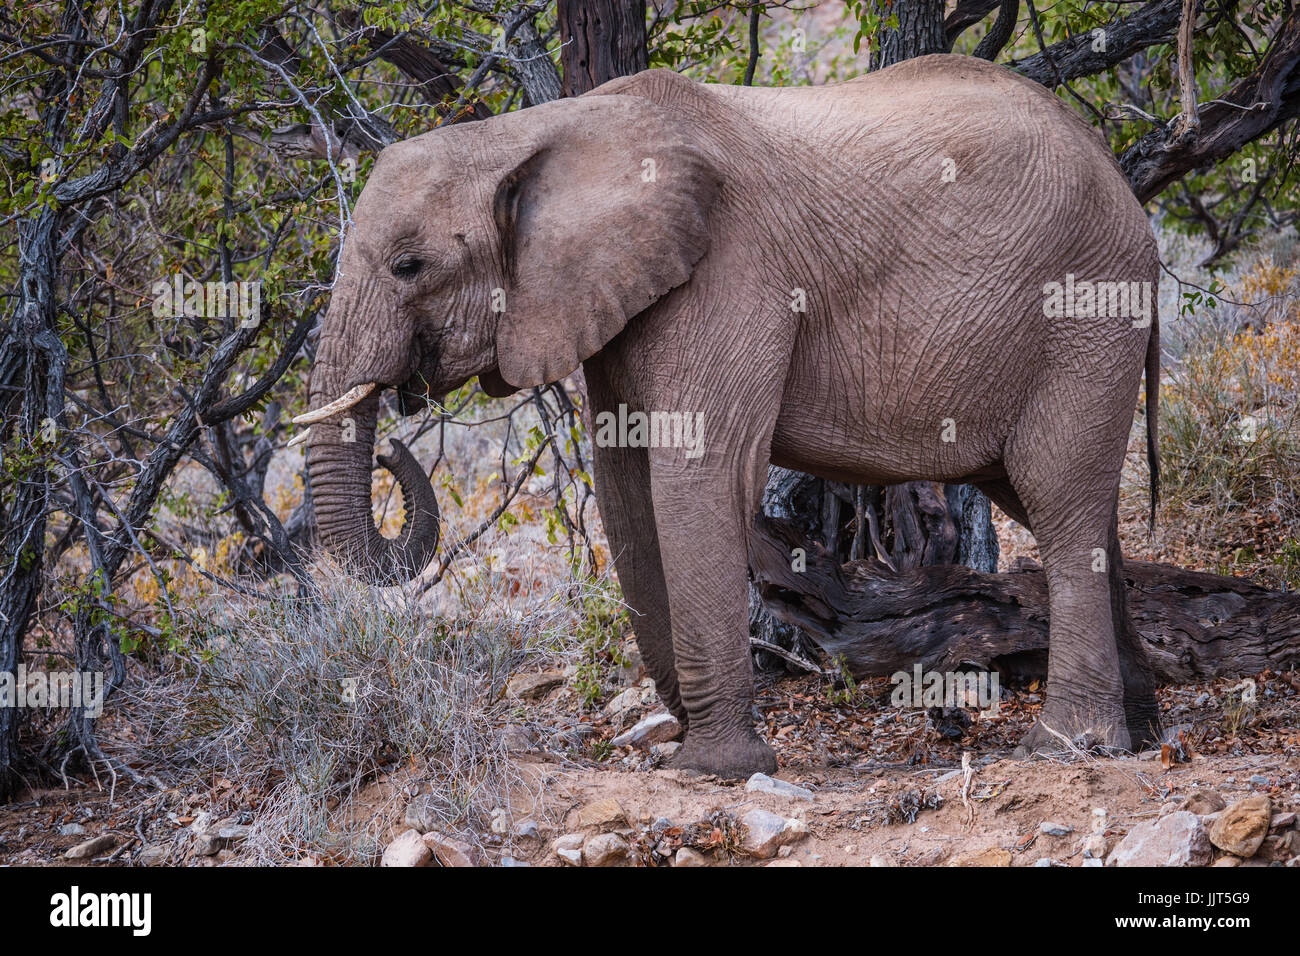 Desert elephant in Namibia, Africa, one of the world's oldest deserts. Stock Photo